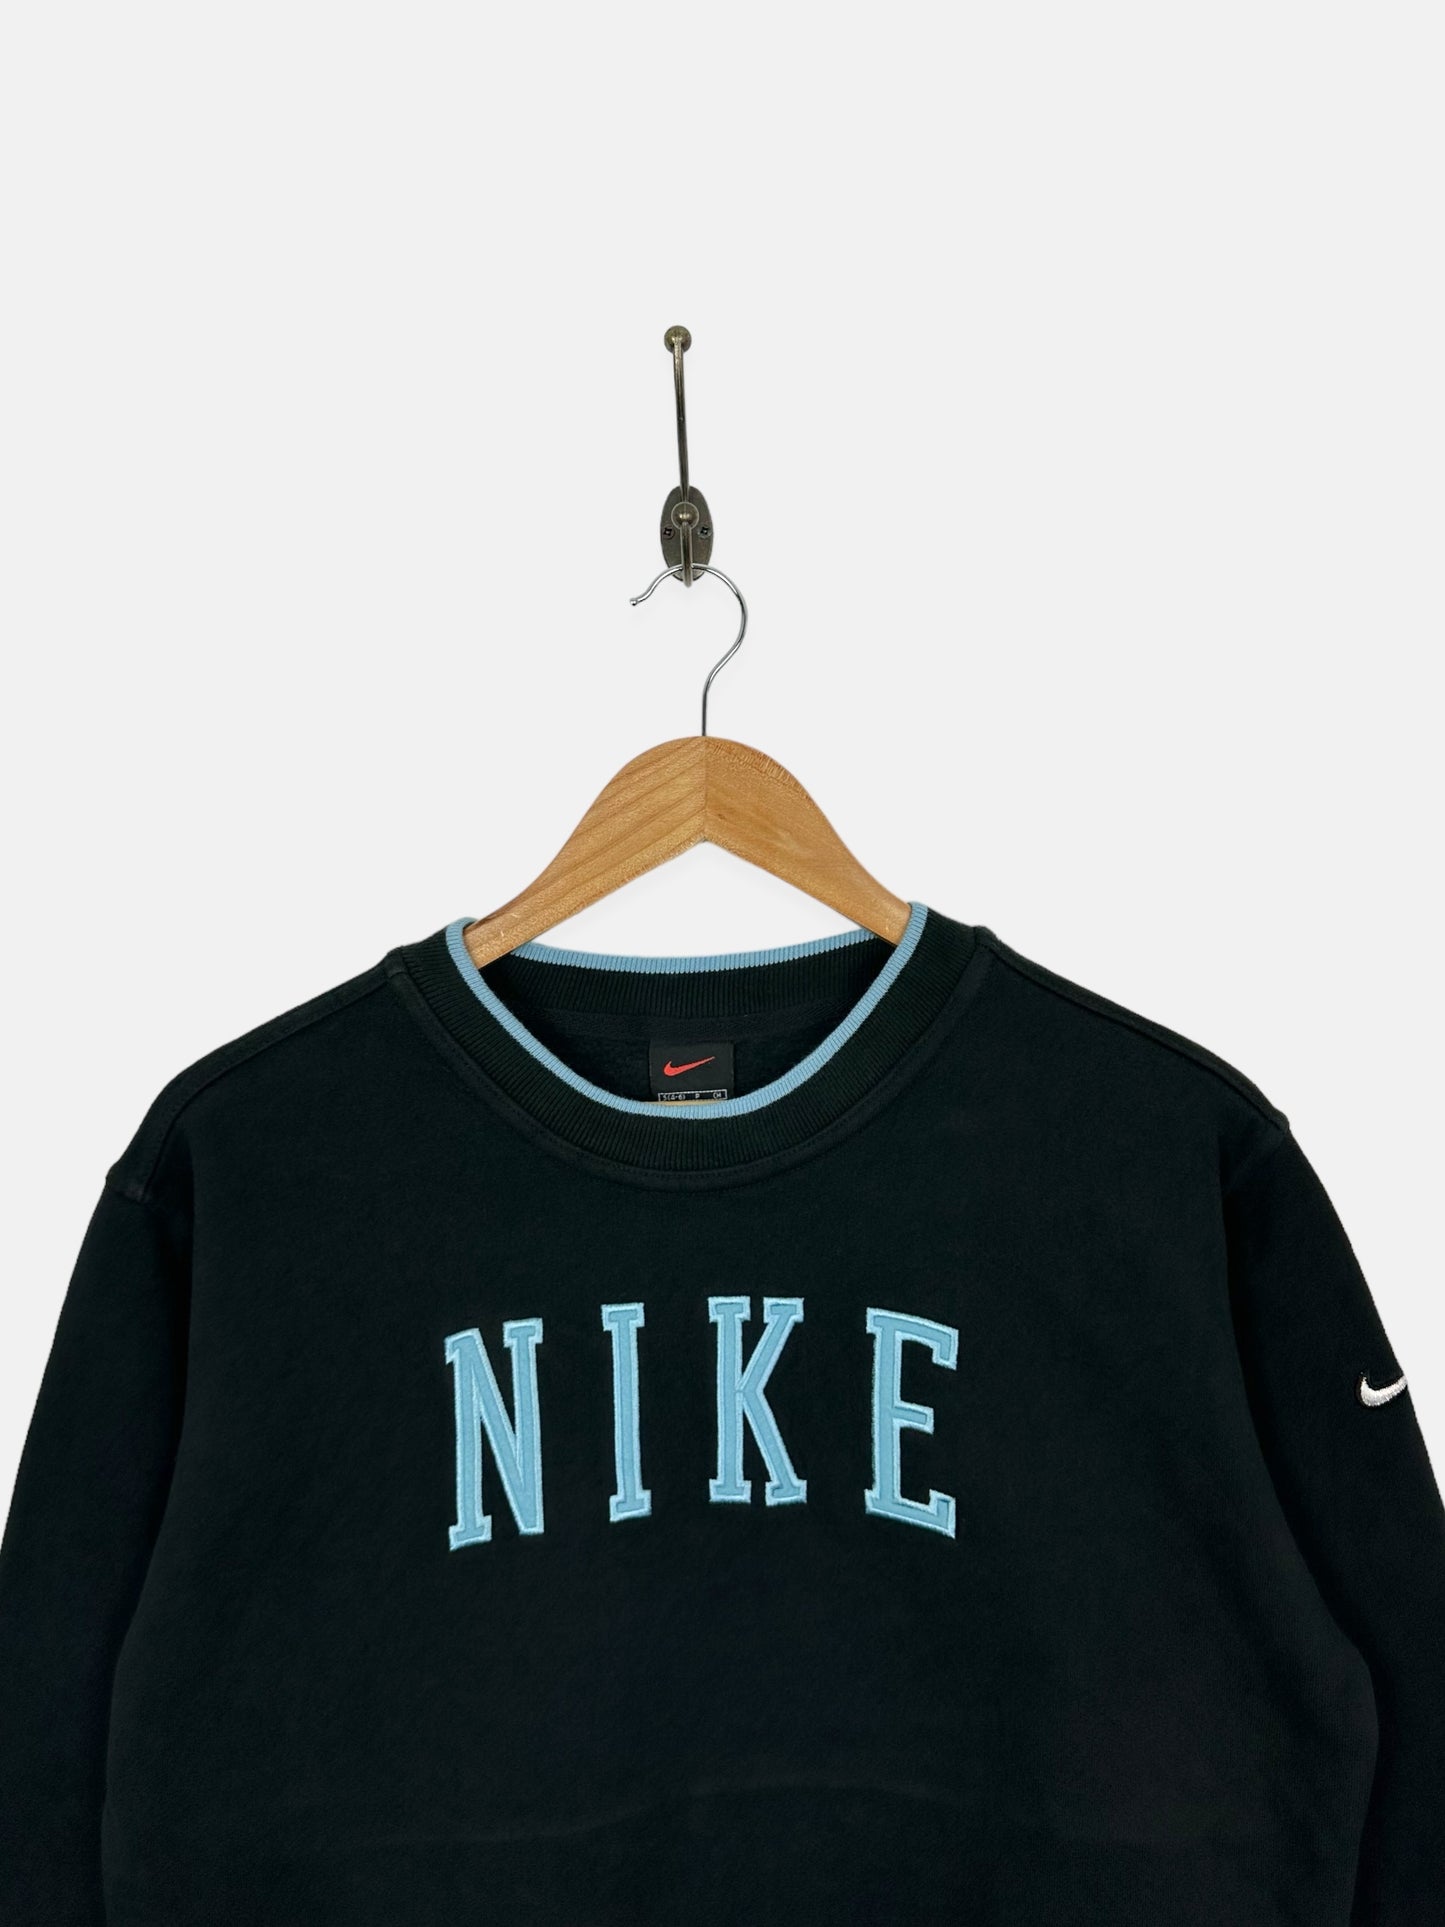 90's Nike Embroidered Vintage Sweatshirt Size 4-6